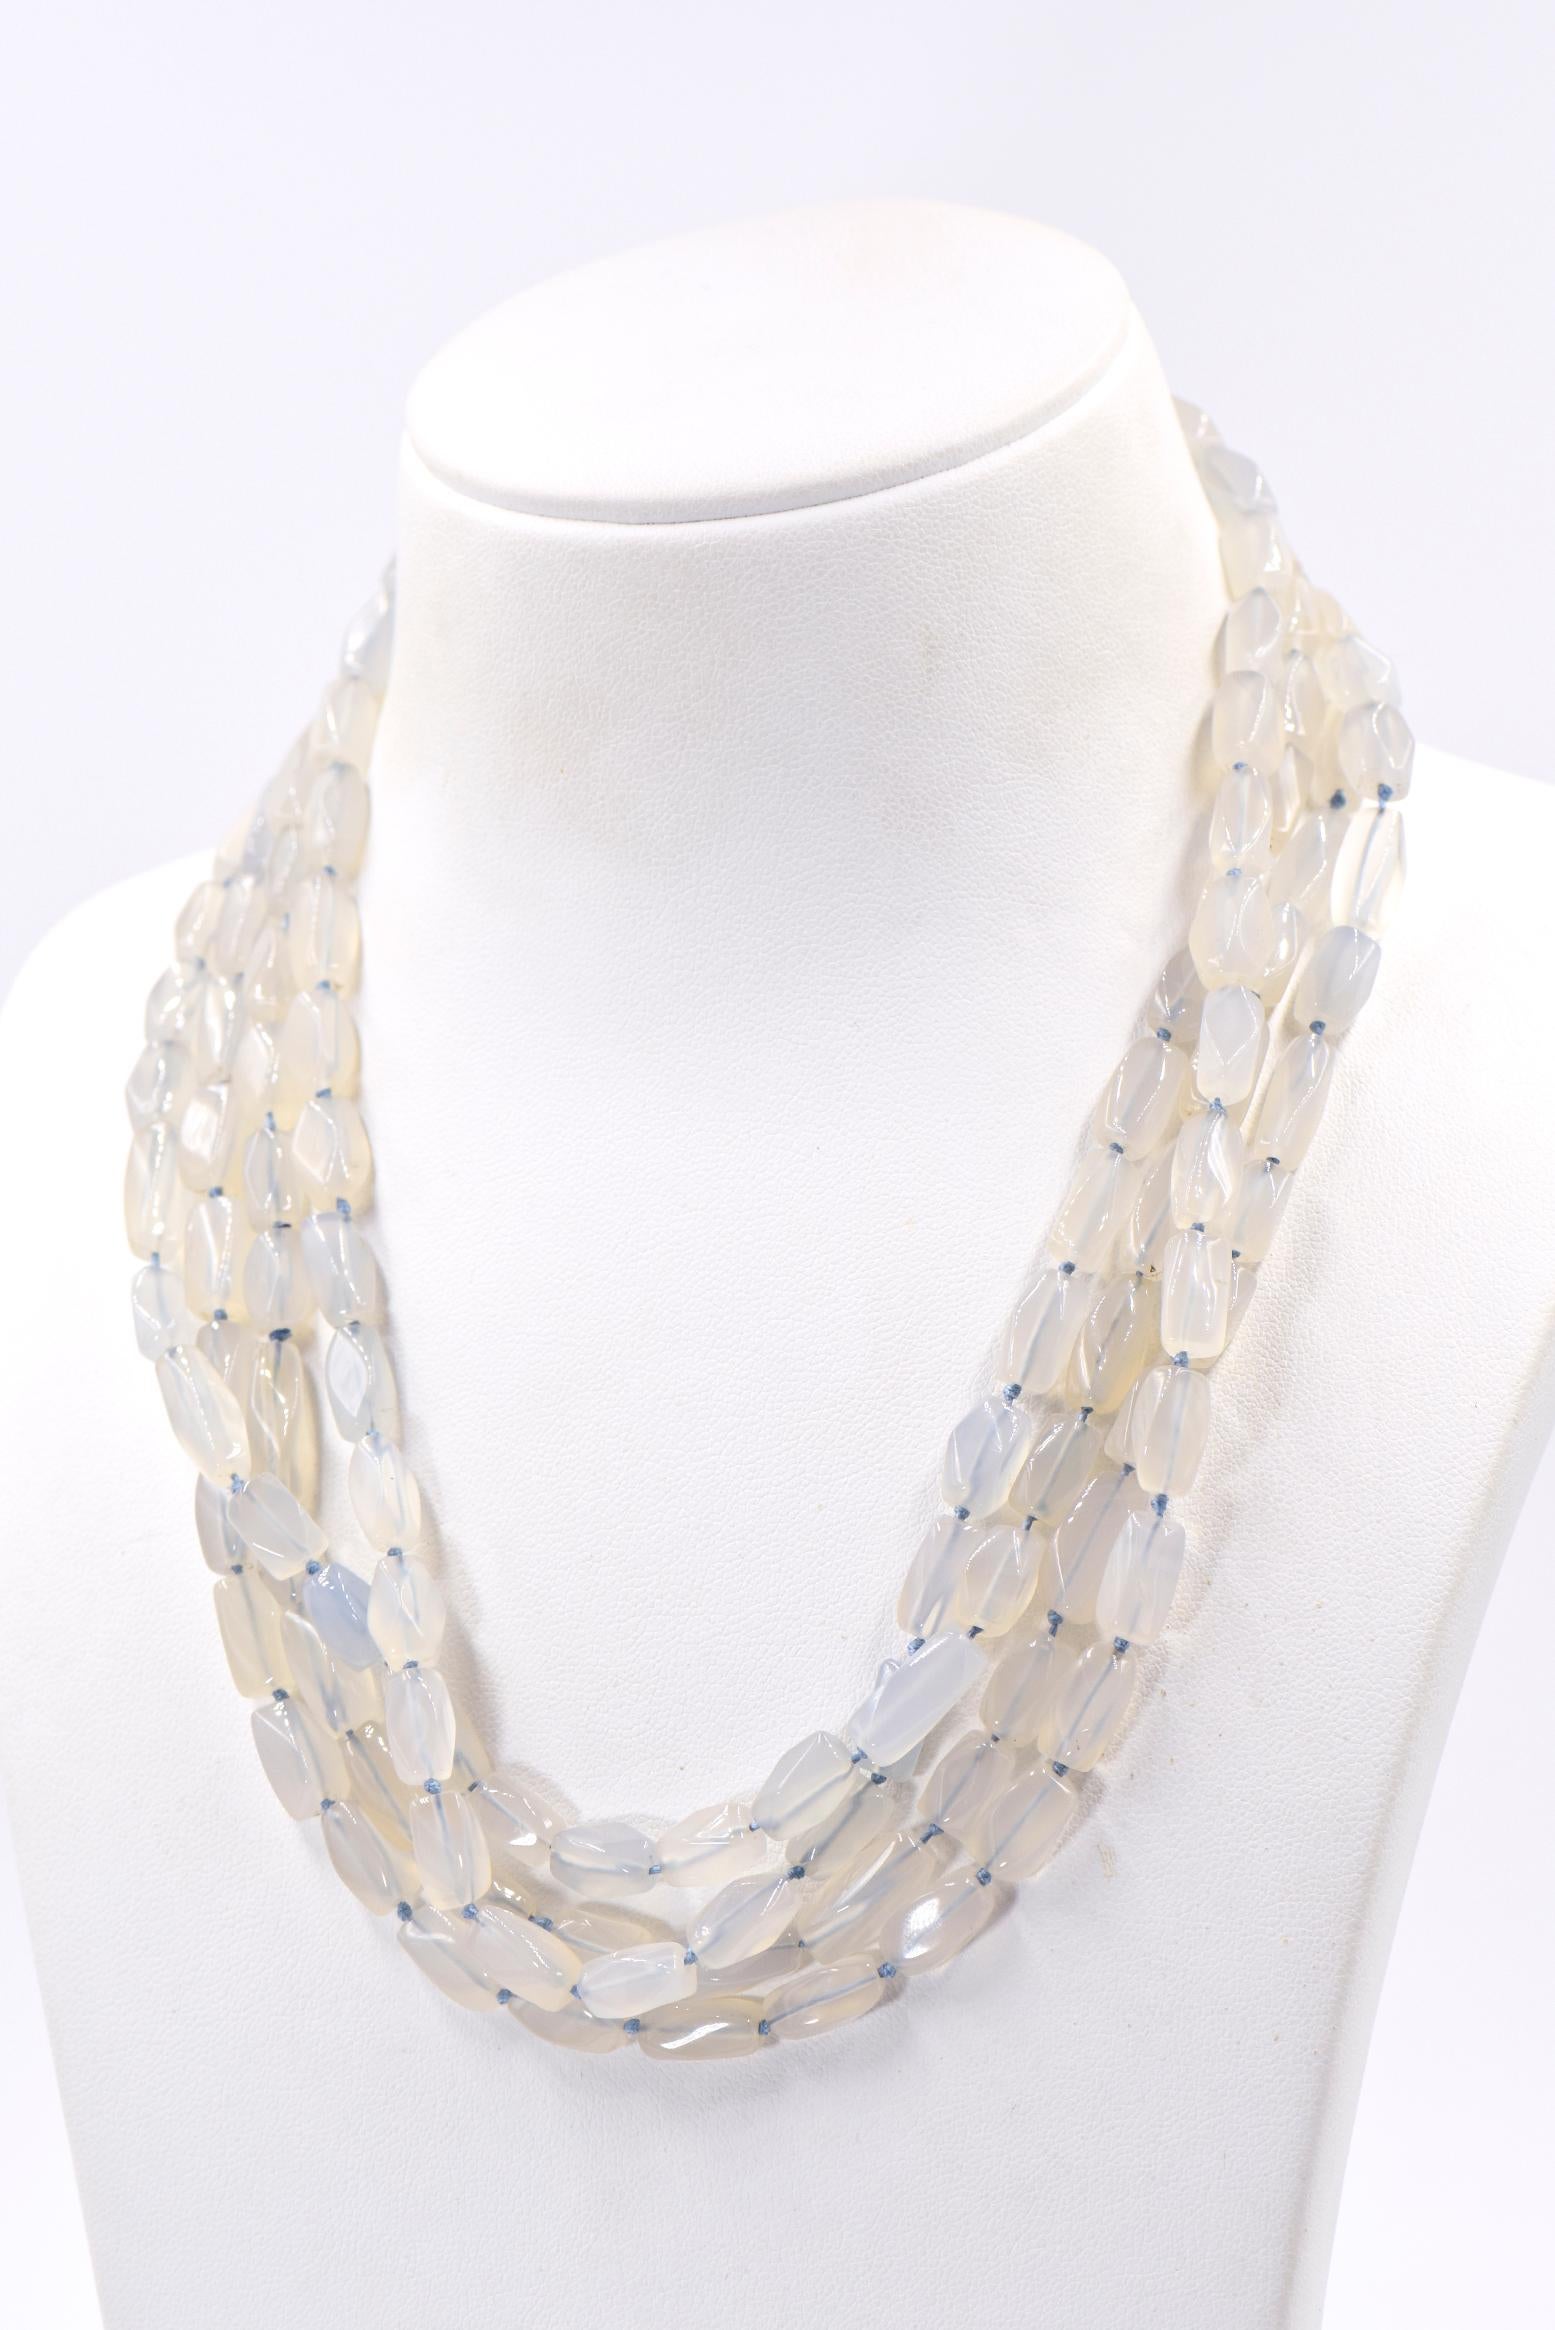 Marlene Stowe Chalcedony Diamond Bead Gold Necklace For Sale 3